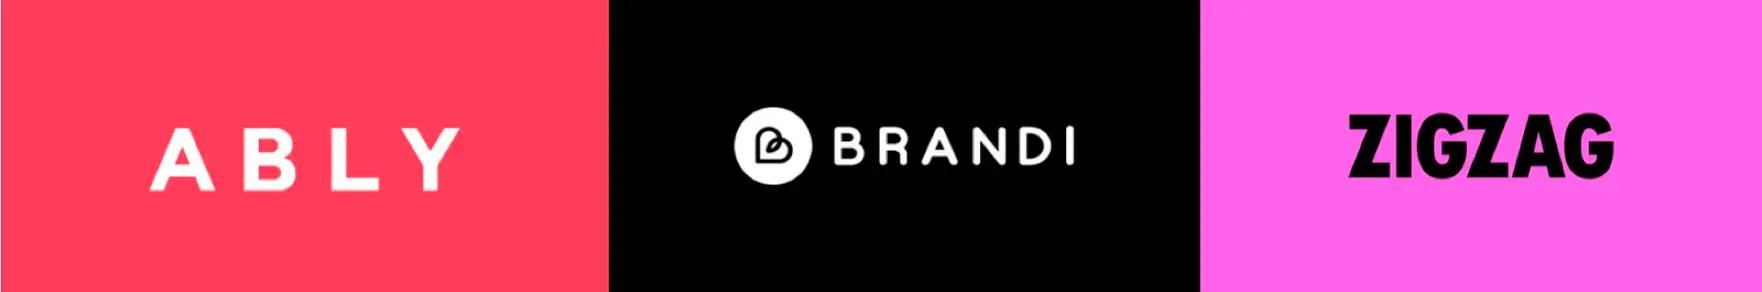 Brand logos of ABLY, BRANDI, and ZIGZAG